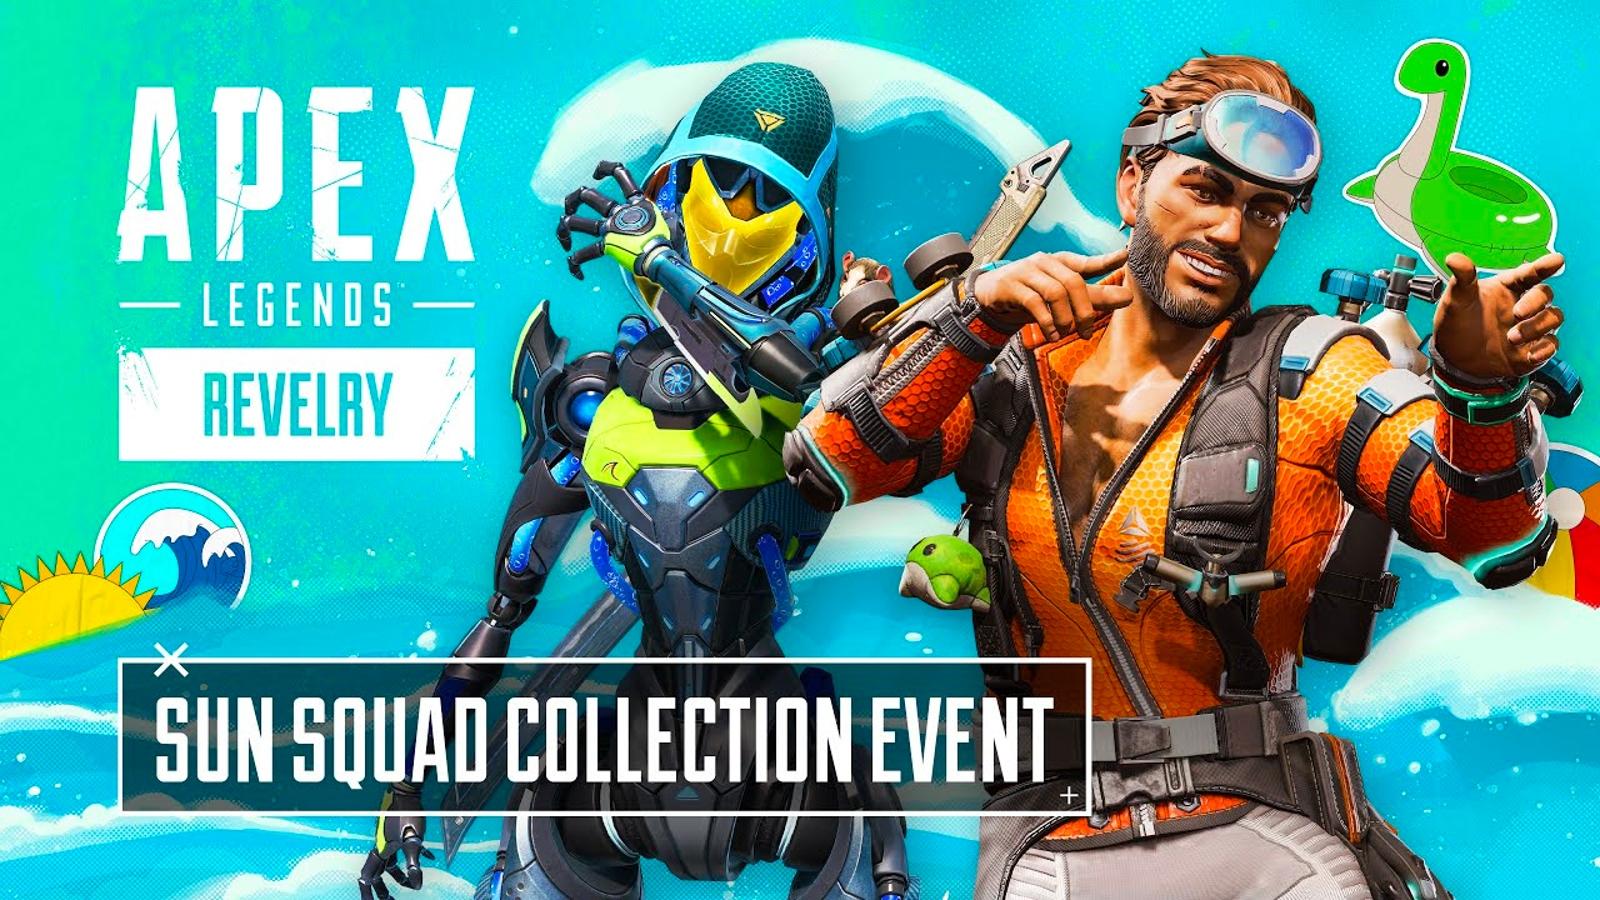 Sun Squad collection event apex